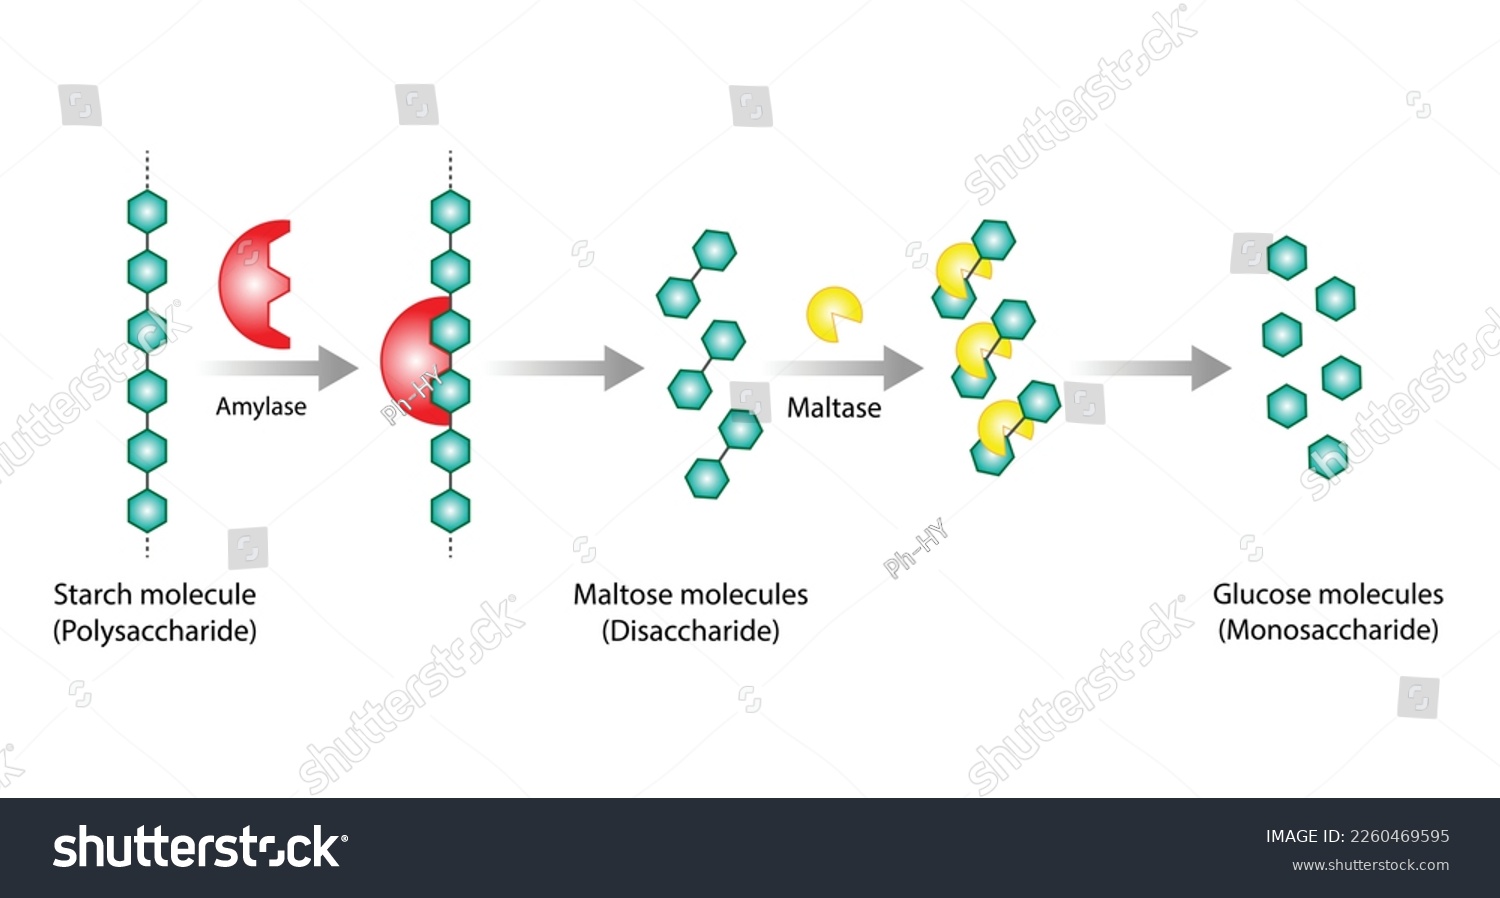 SVG of Carbohydrates Digestion. Amylase and Maltase Enzymes catalyze Polysaccharide Starch Molecule to Disaccharide Maltose Molecules, glucose Sugar Formation. Scientific Diagram. Vector Illustration. svg